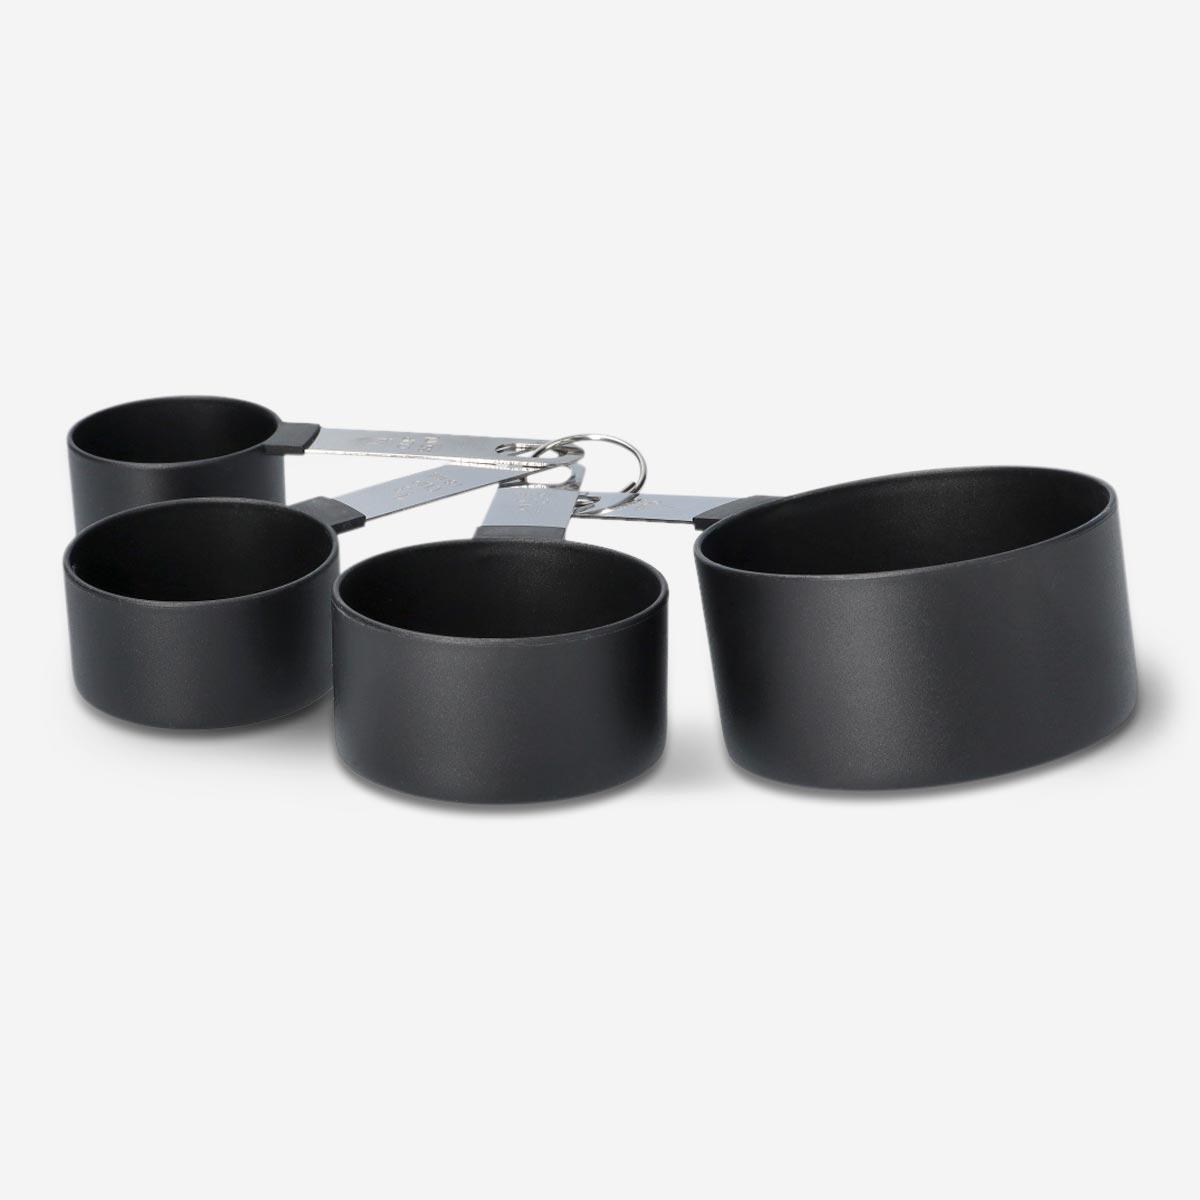 Black measuring cups